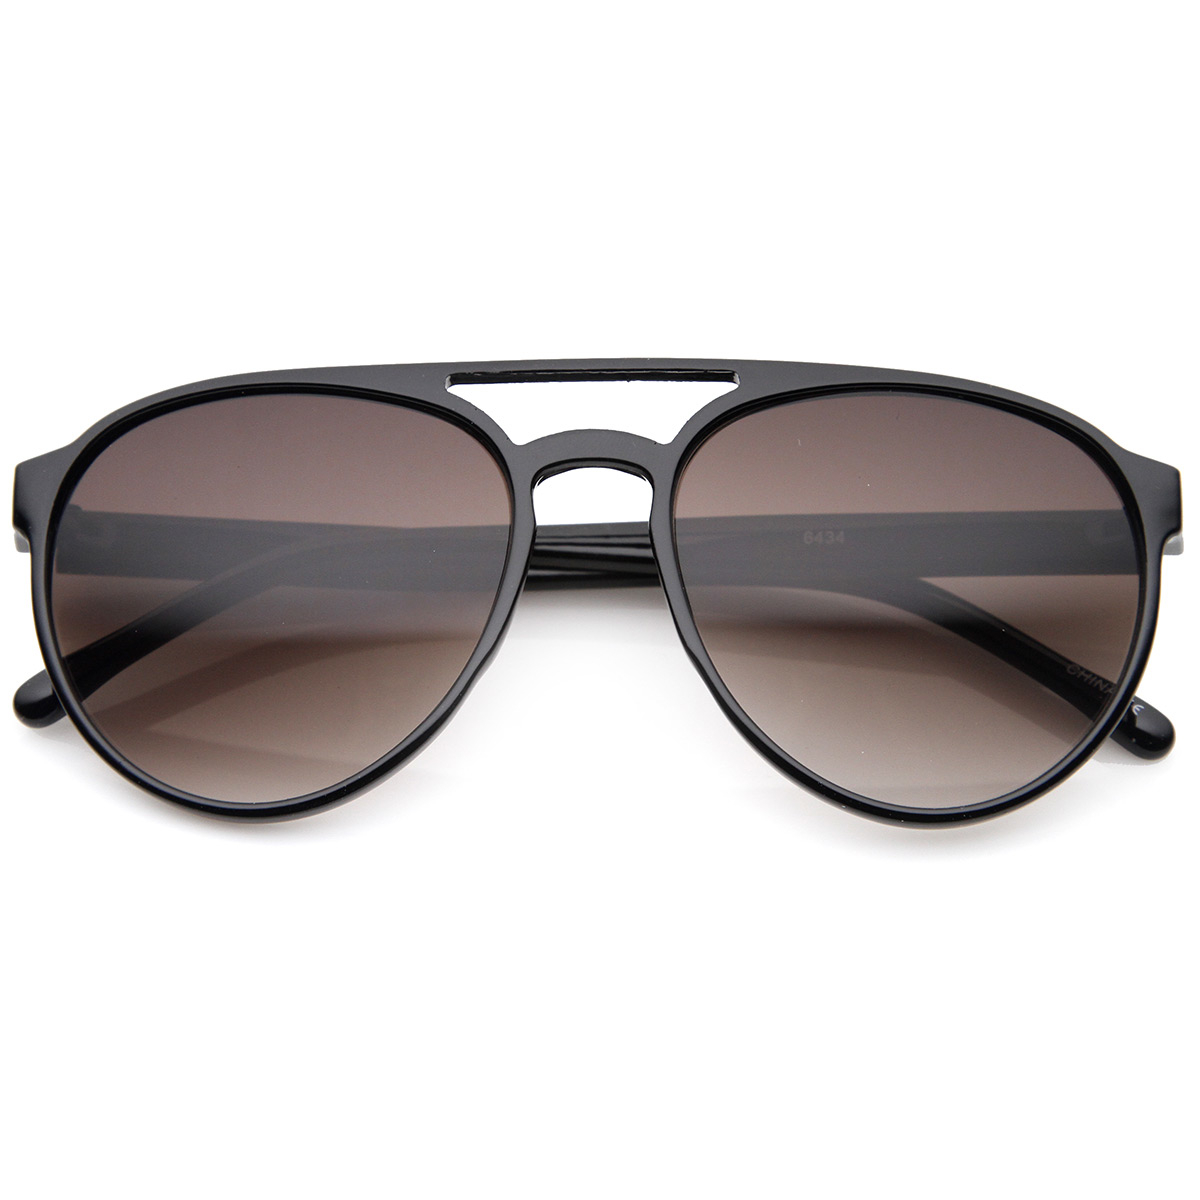 Thin Crafted Retro Plastic Aviator Sunglasses 9747 - Shiny-Black Lavender